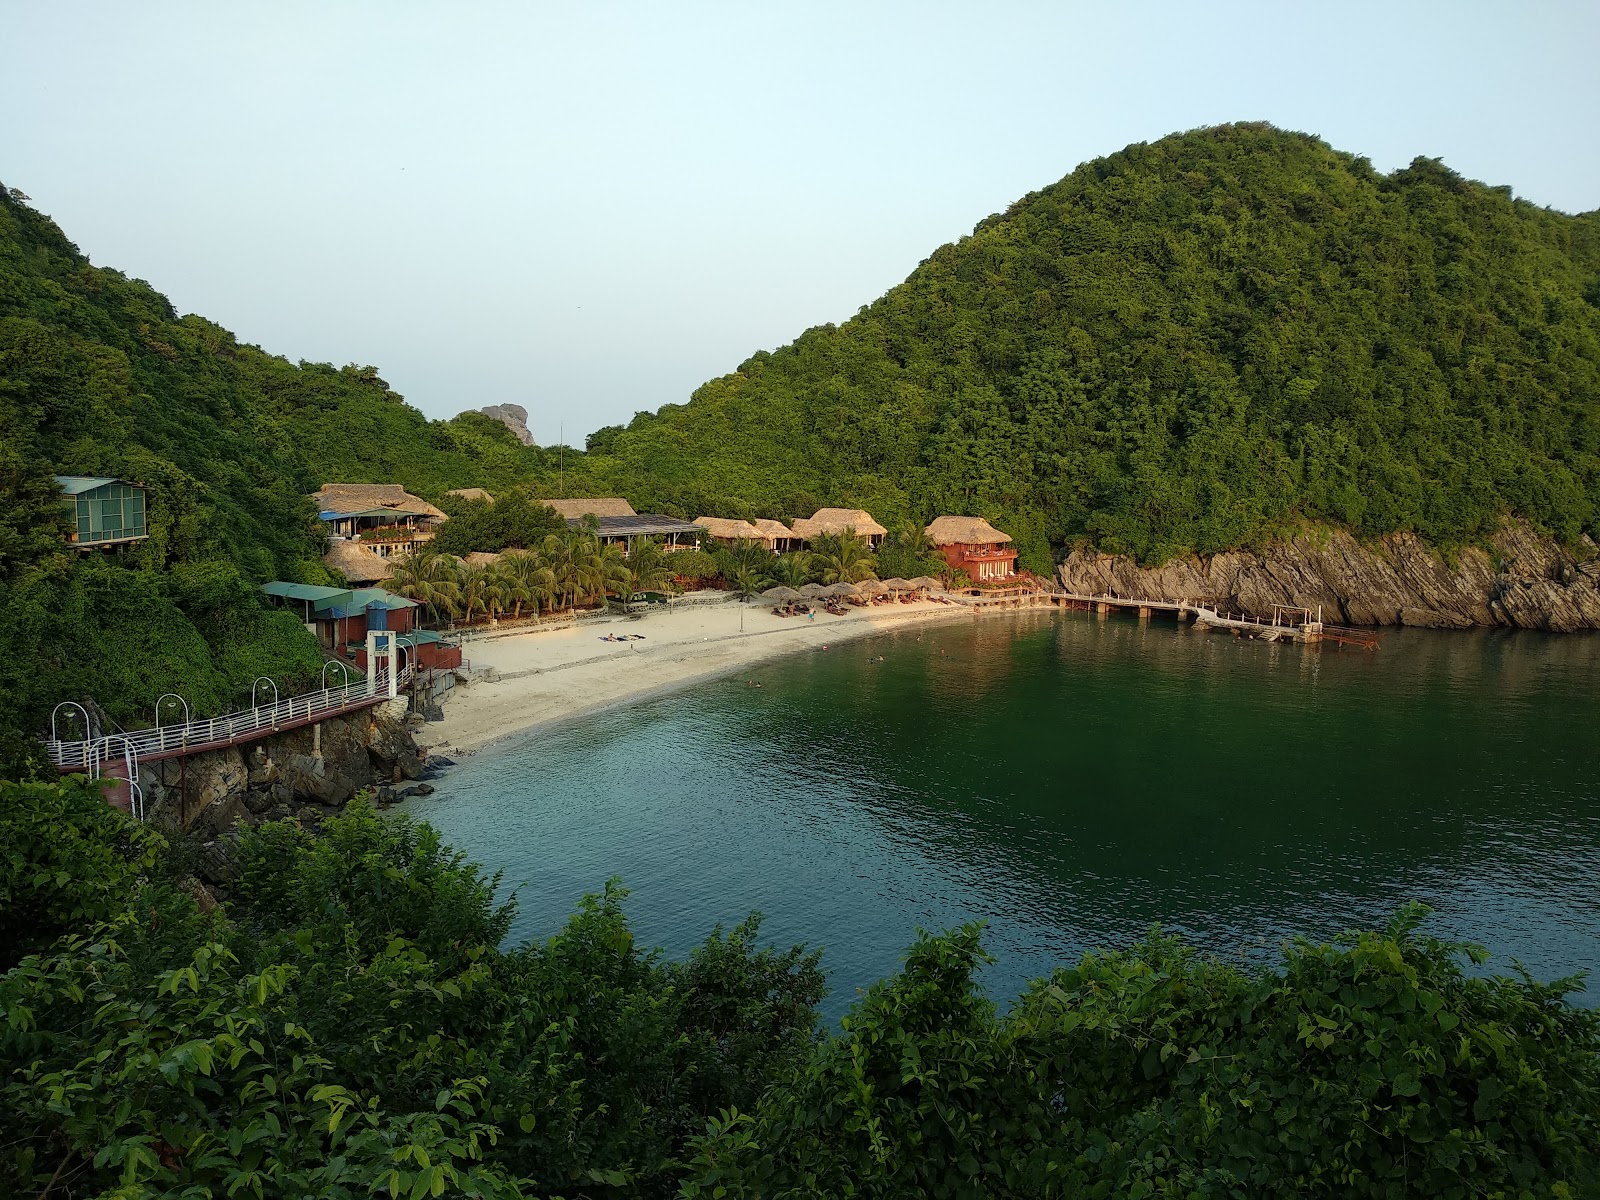 Foto de Monkey Island Resort - lugar popular entre os apreciadores de relaxamento